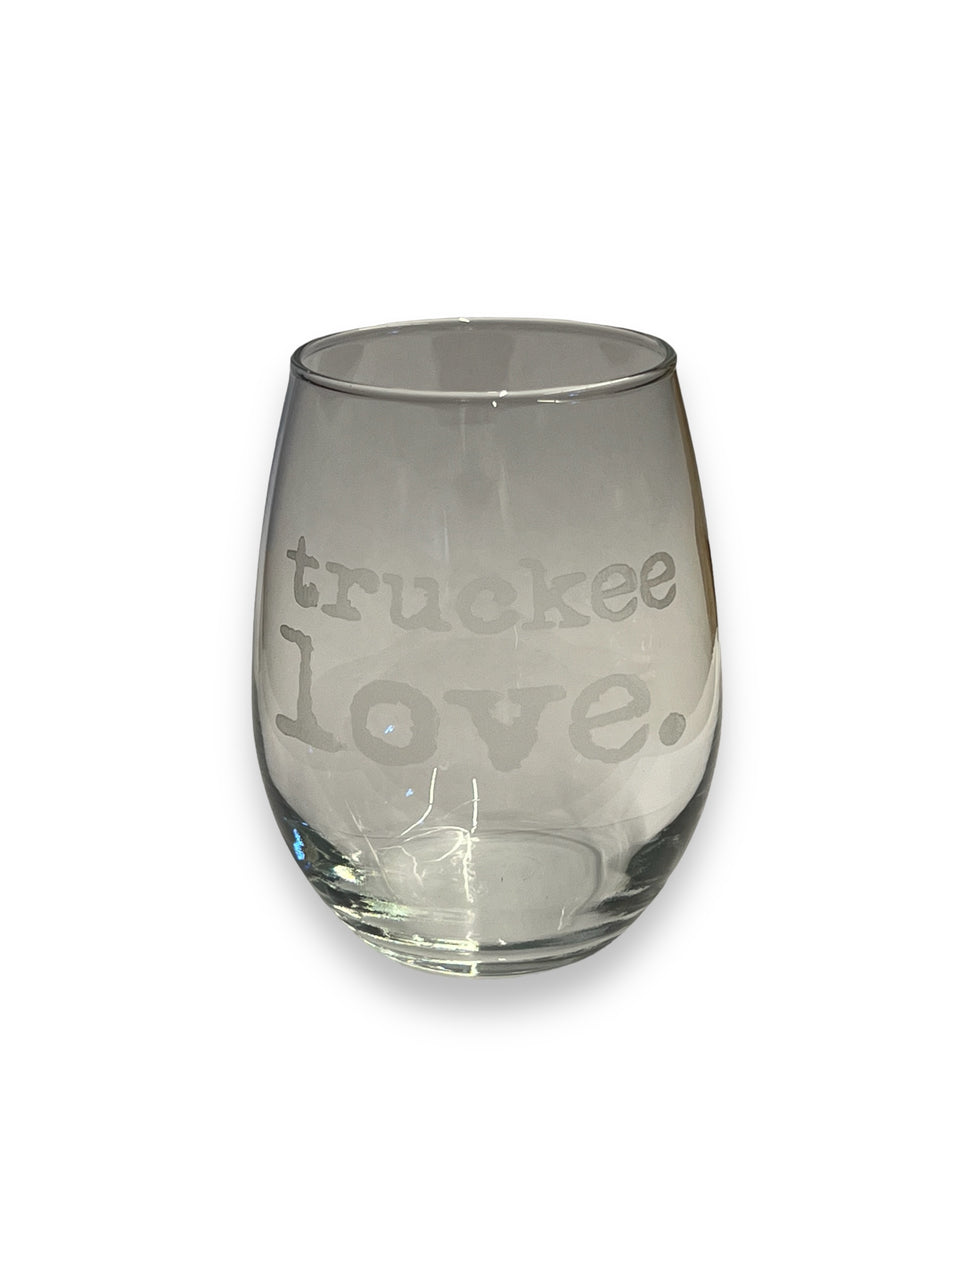 truckee love. stemless wine glass